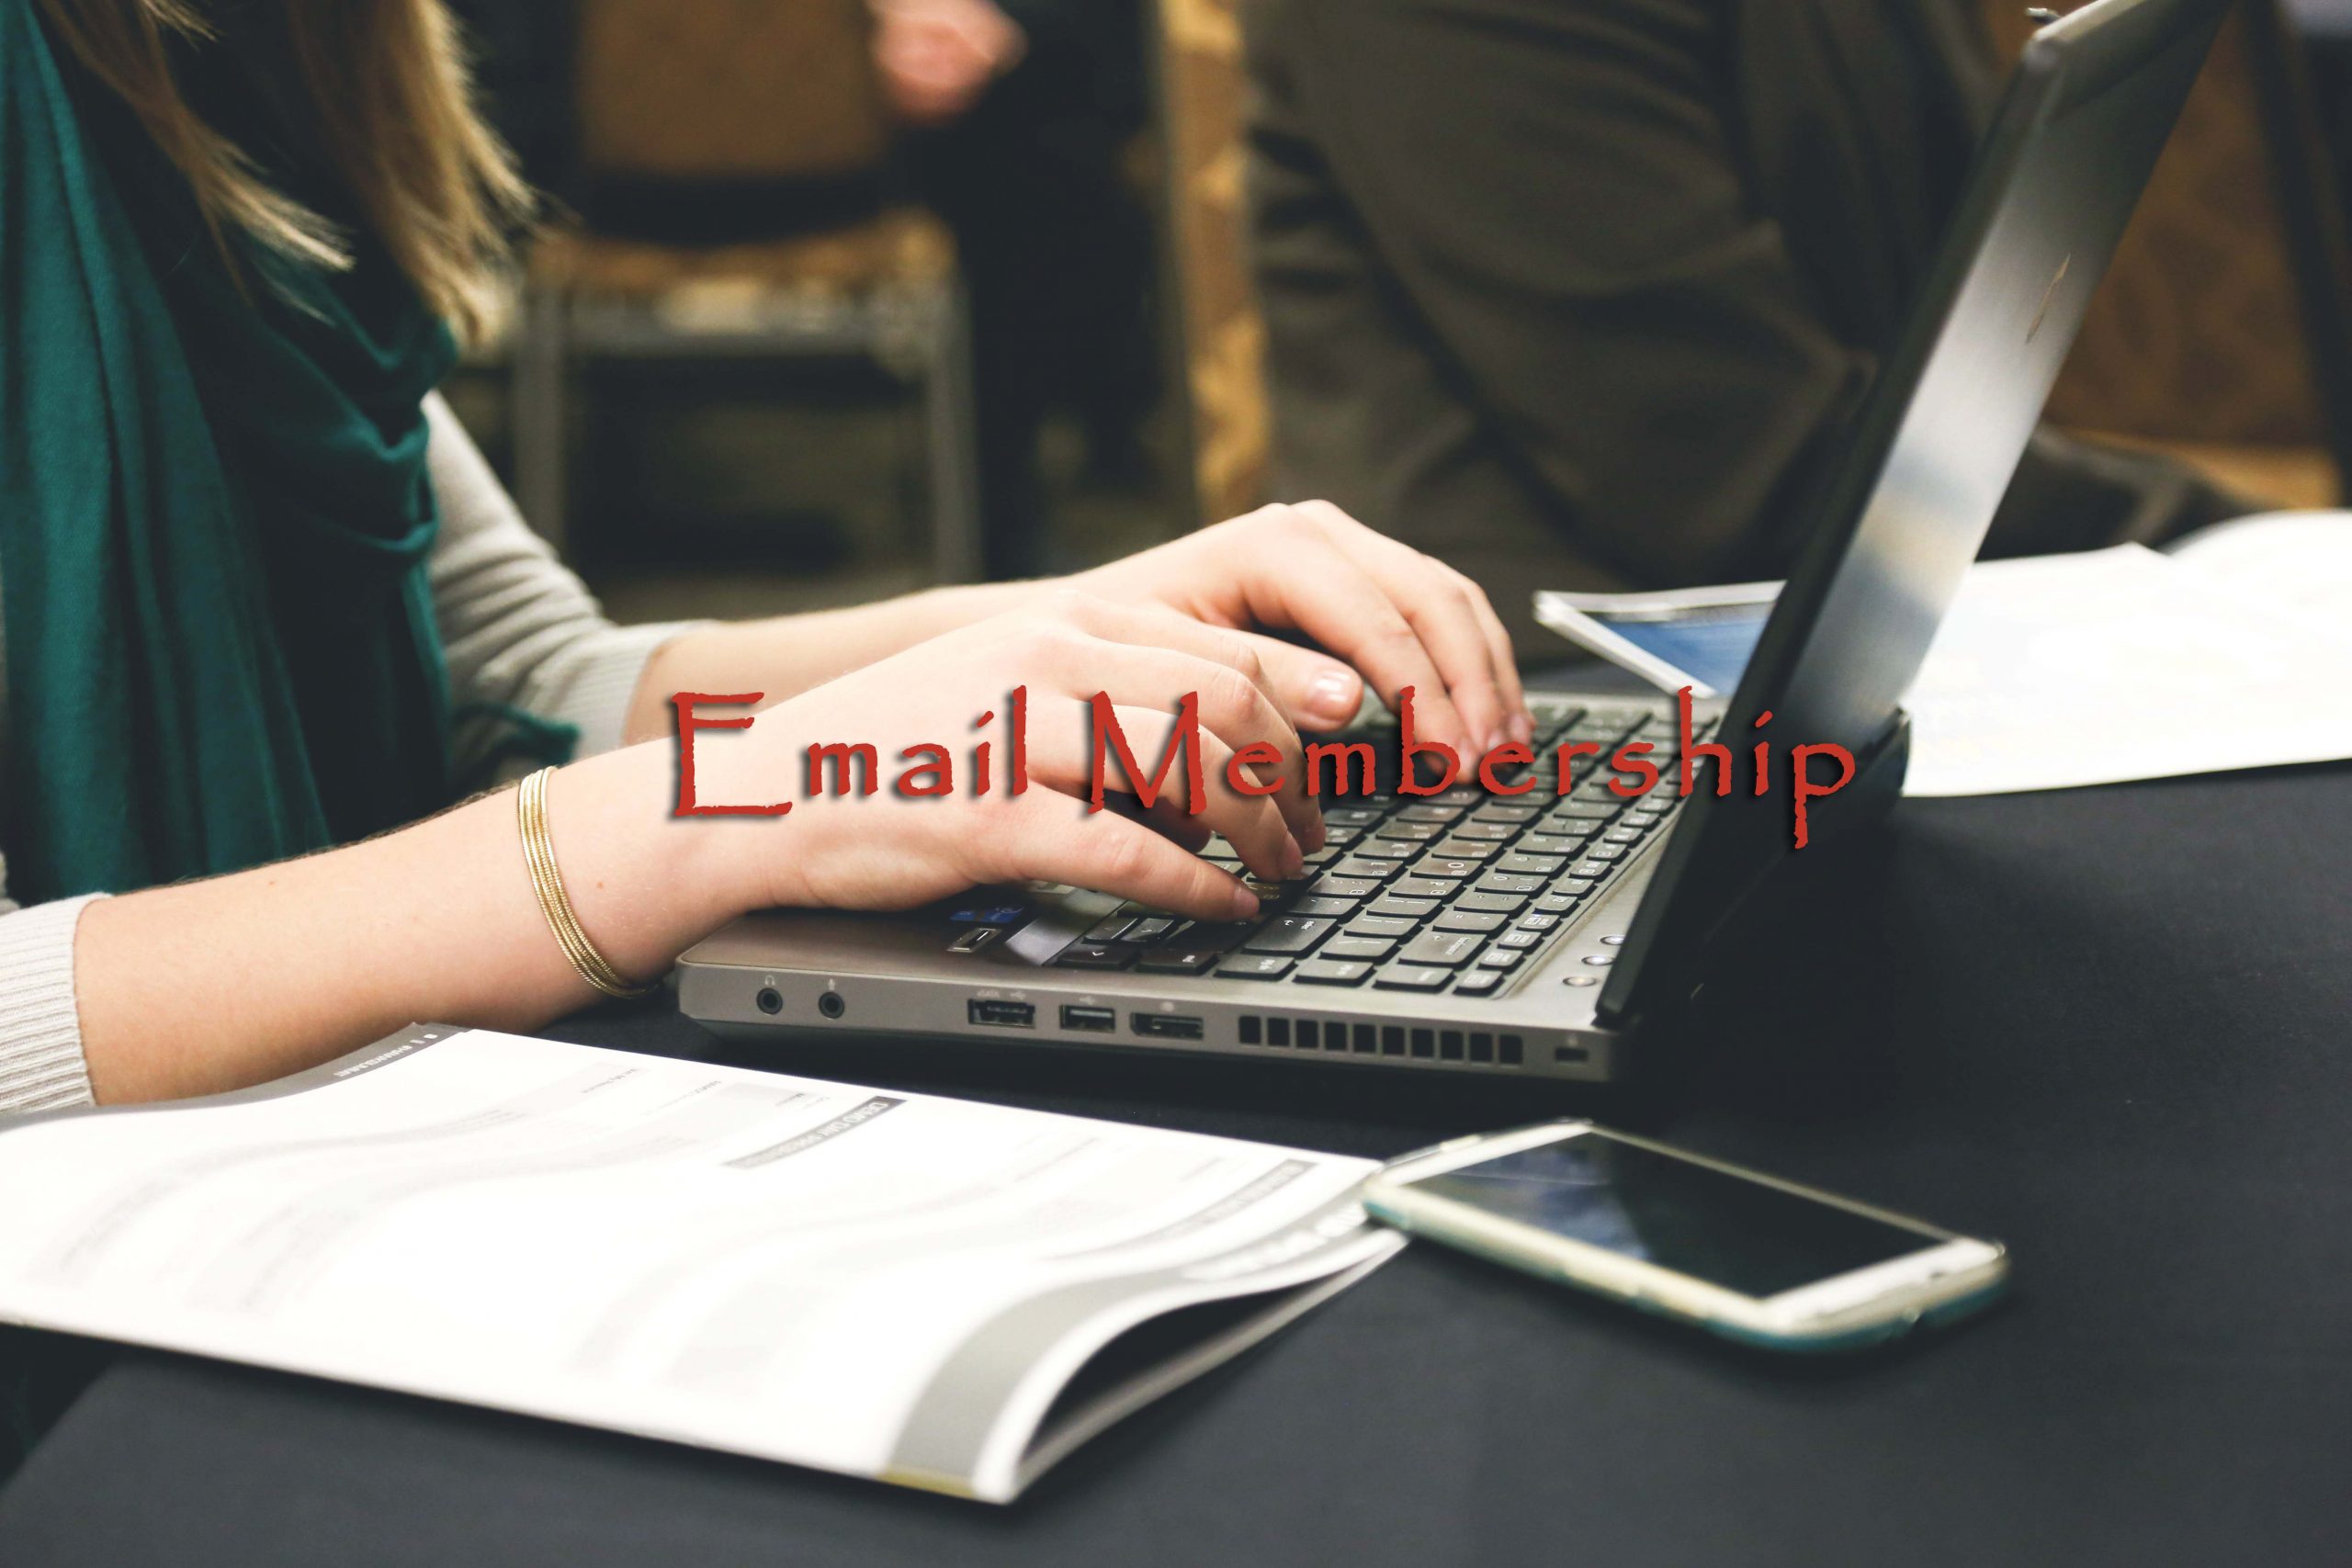 An Email Membership